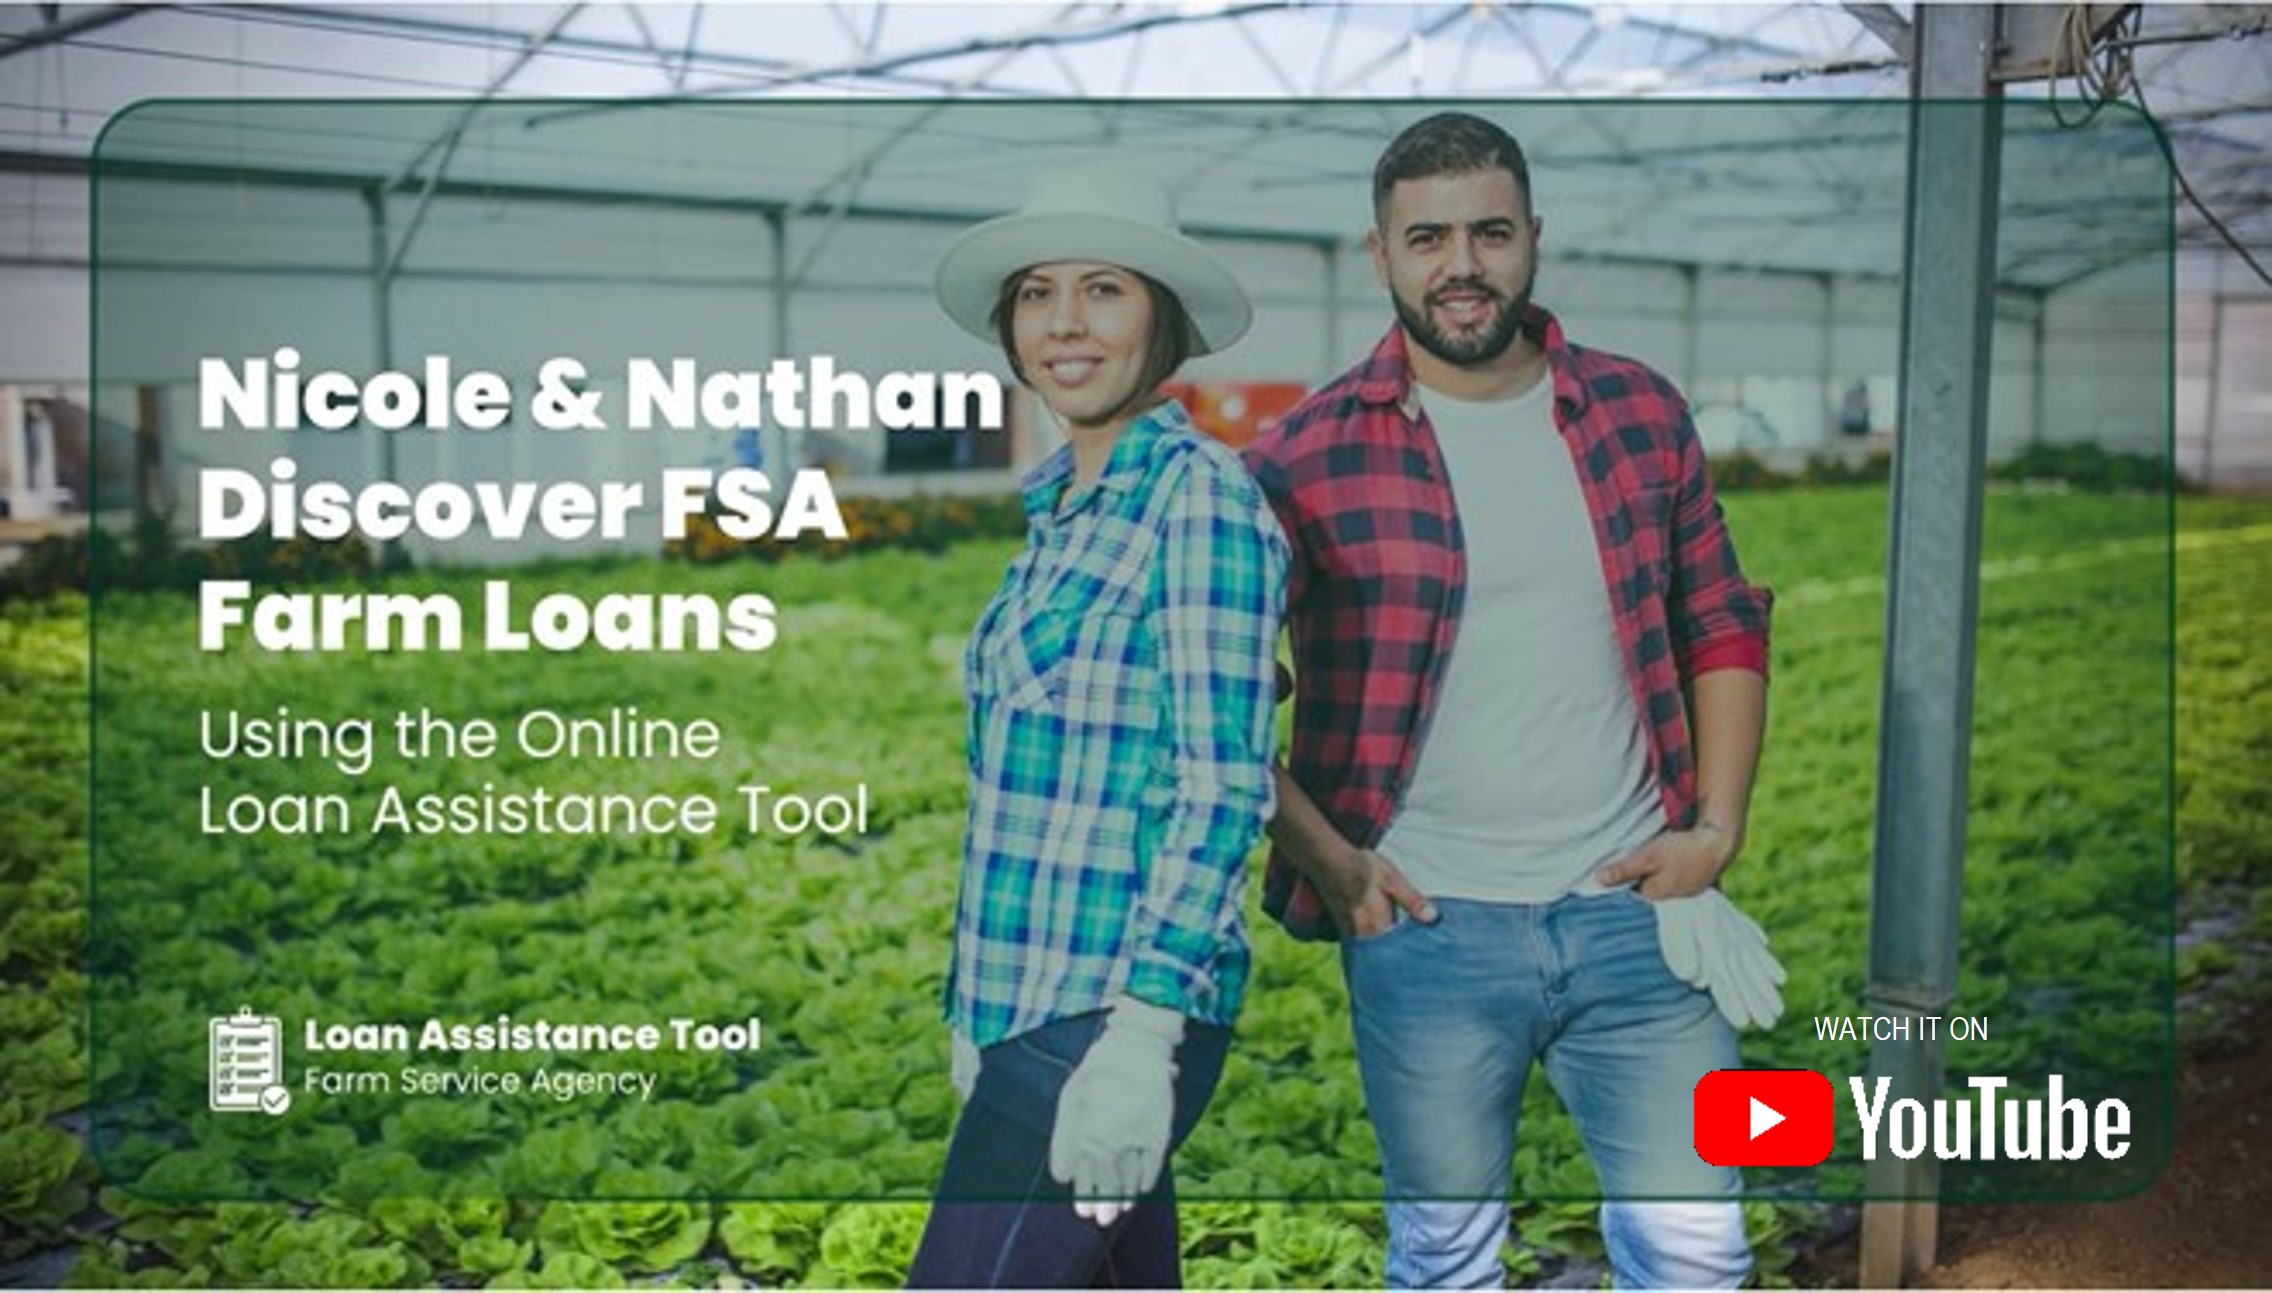 Farm Loan Programs